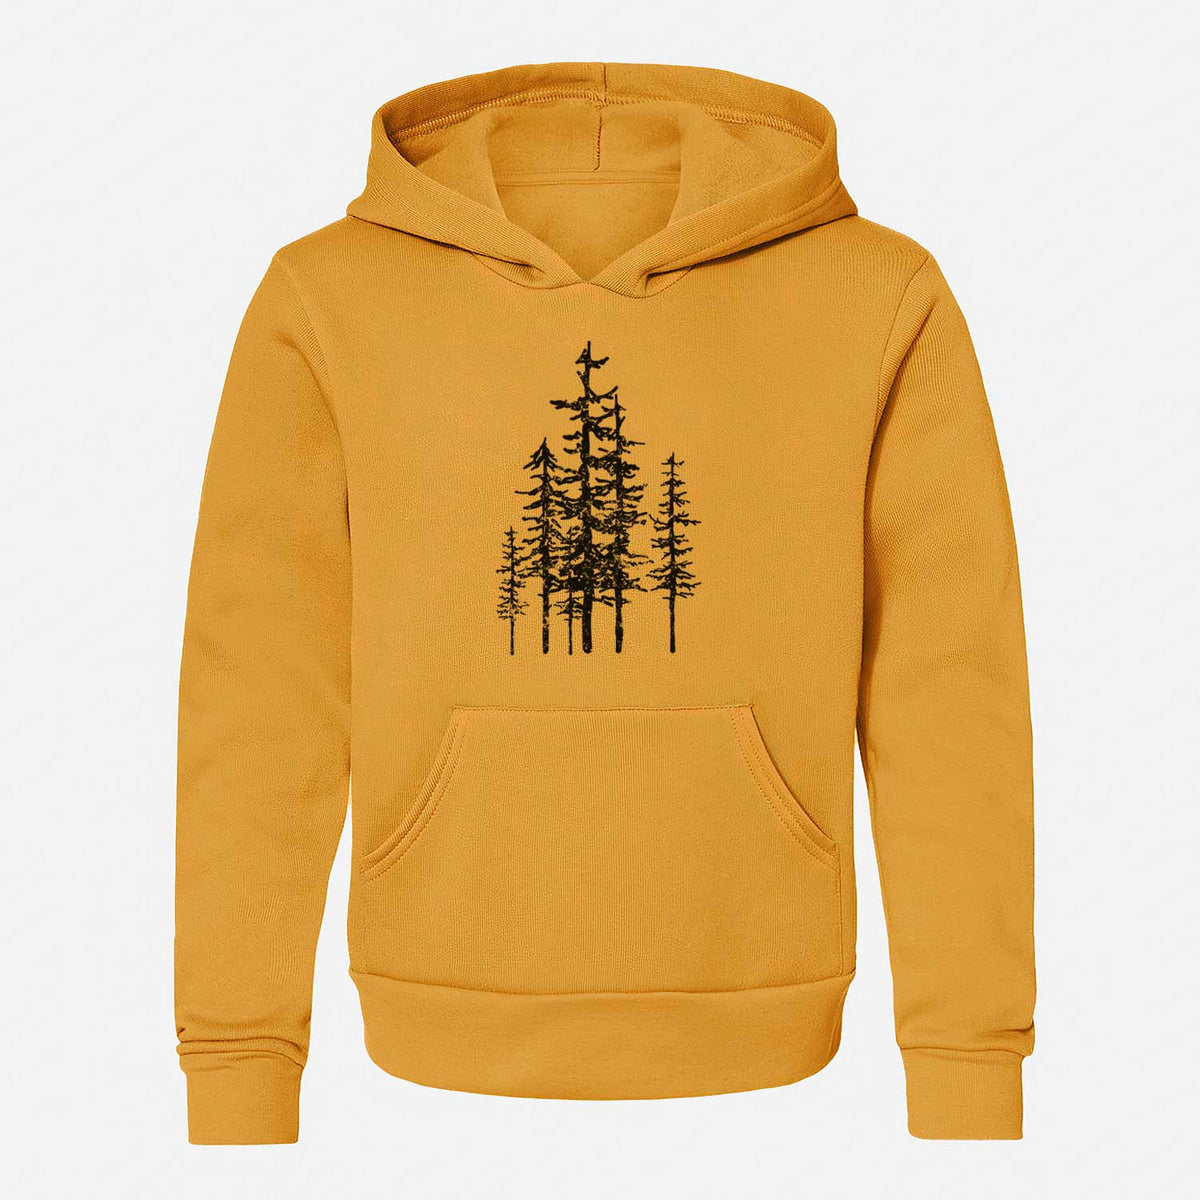 Evergreen Trees - Youth Hoodie Sweatshirt